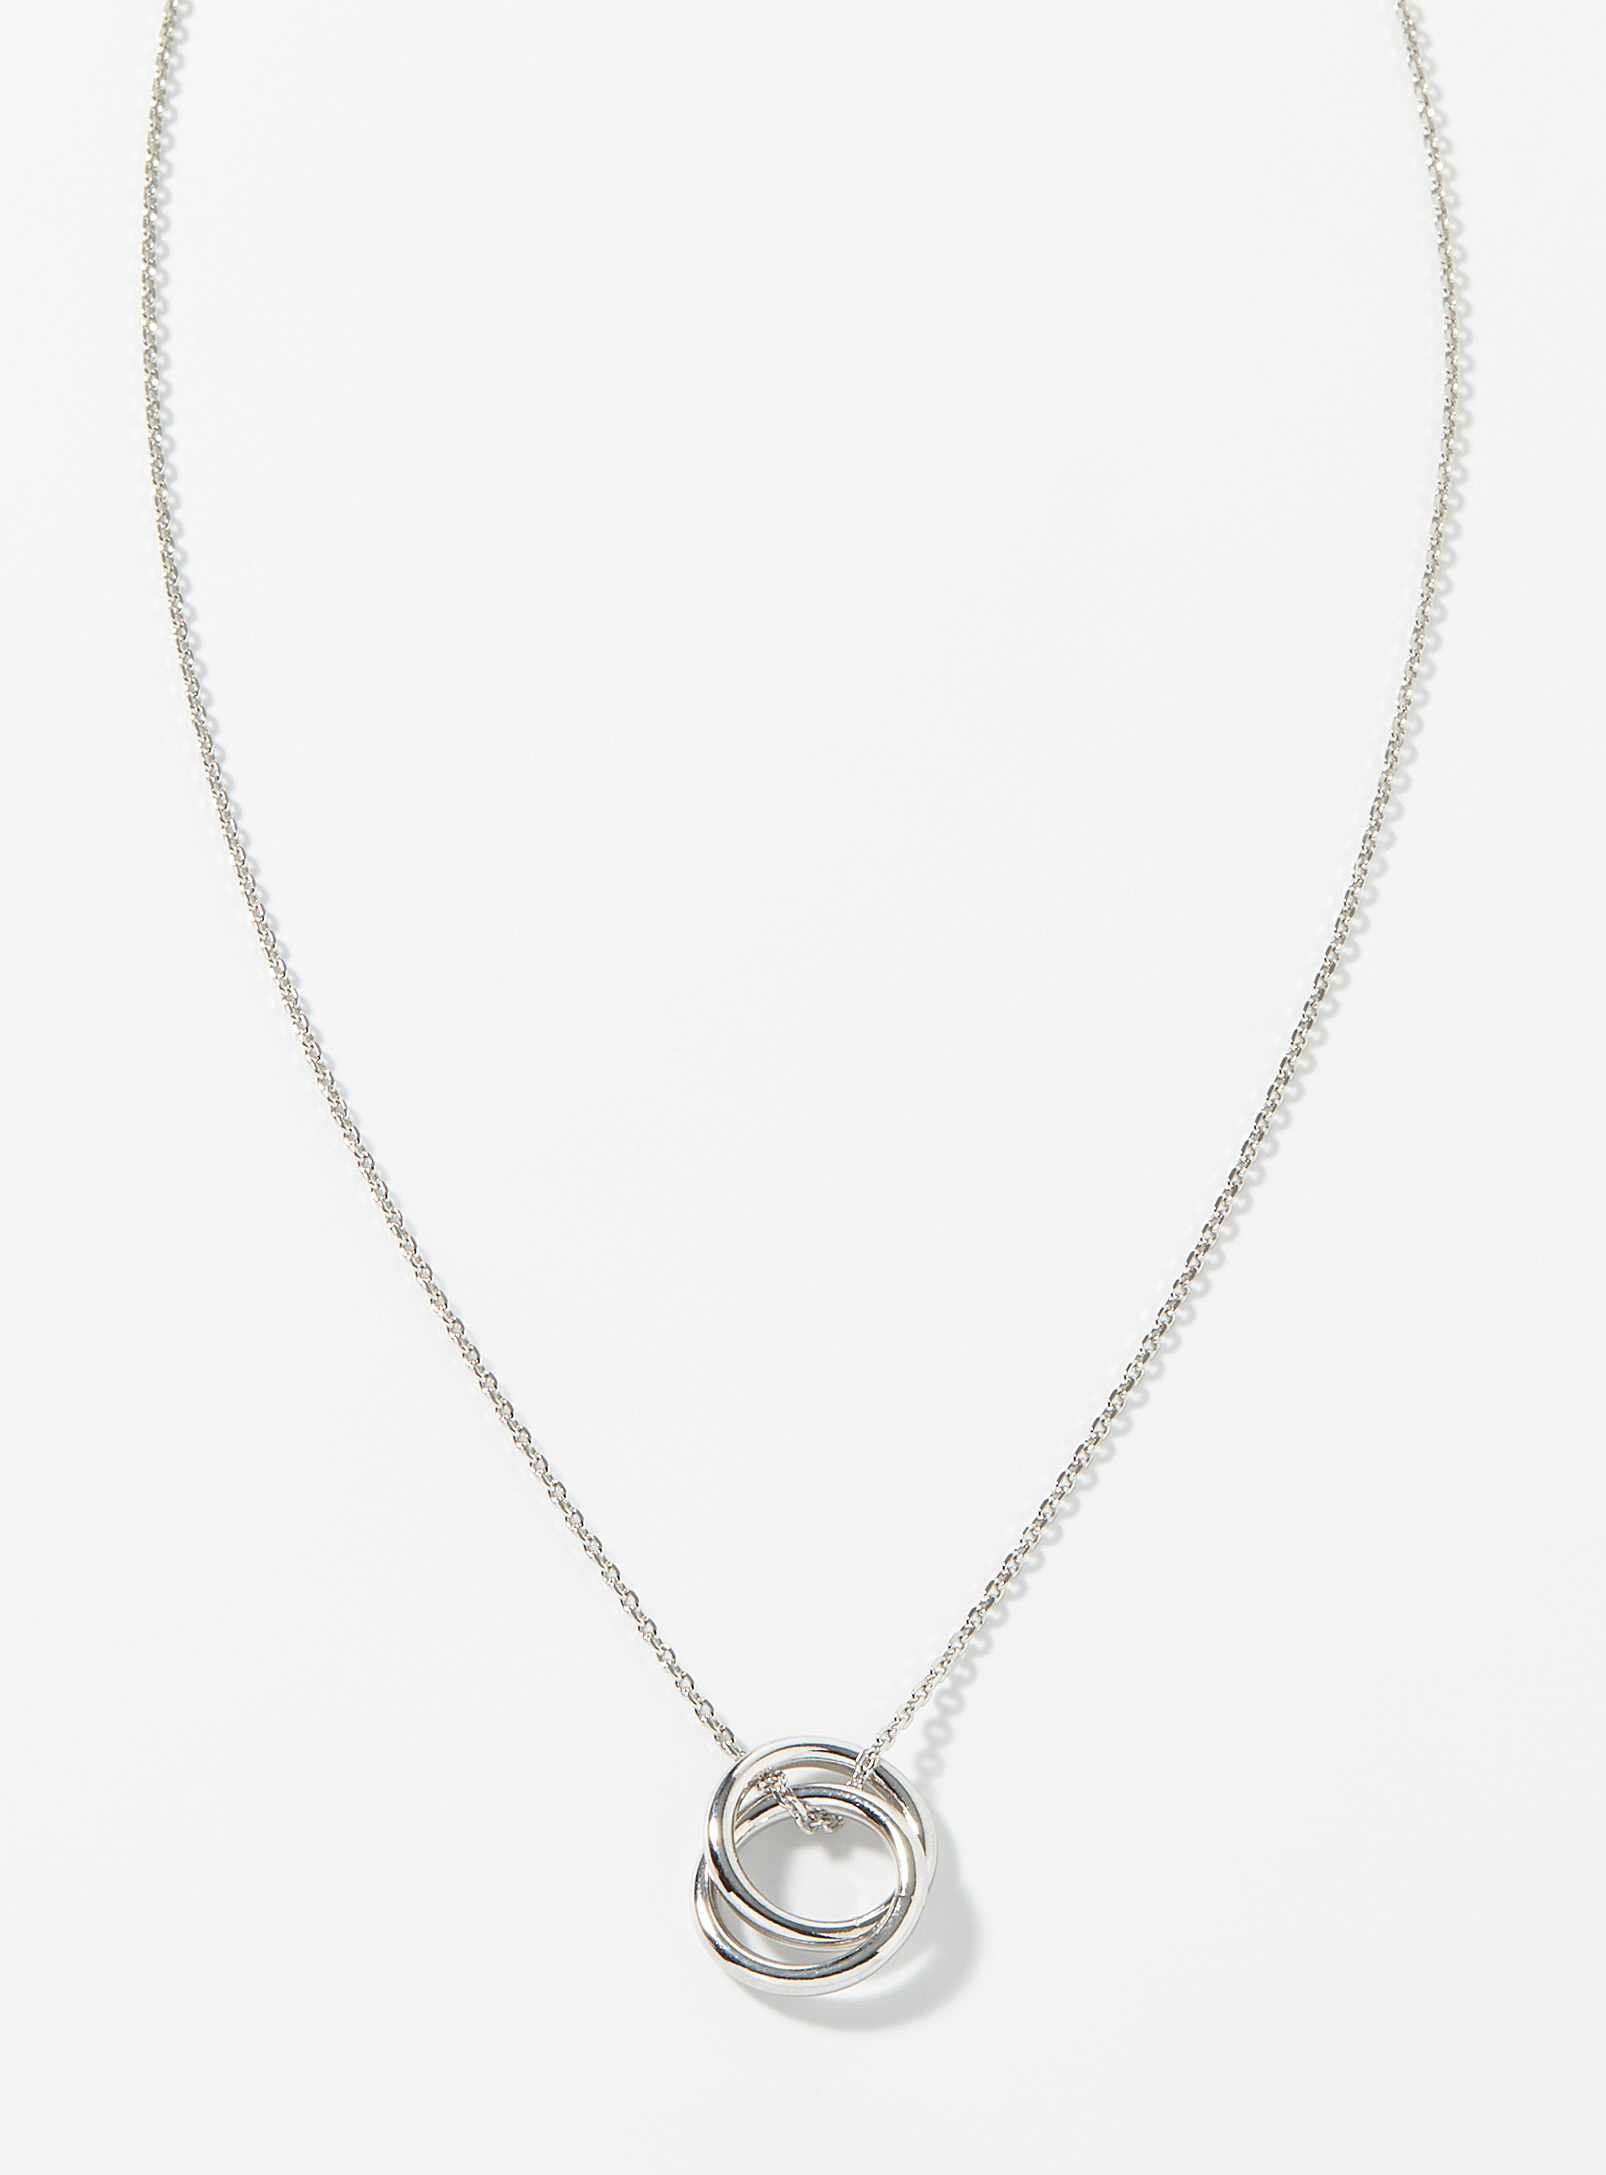 Simons - Women's Interlaced ring silver chain